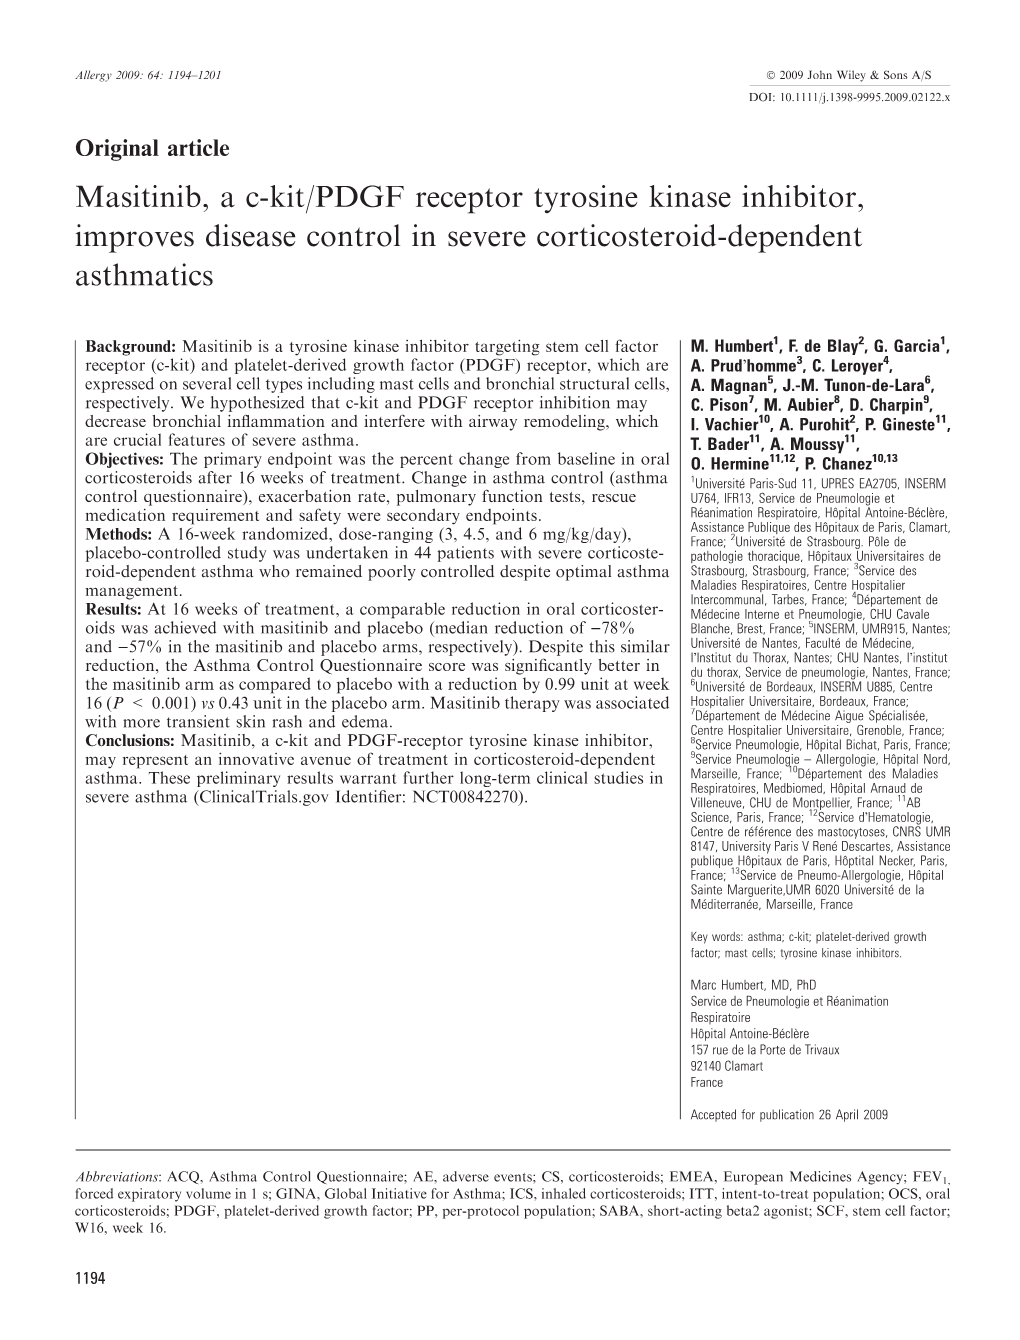 Masitinib, a C-Kit/PDGF Receptor Tyrosine Kinase Inhibitor, Improves Disease Control in Severe Corticosteroid-Dependent Asthmatics